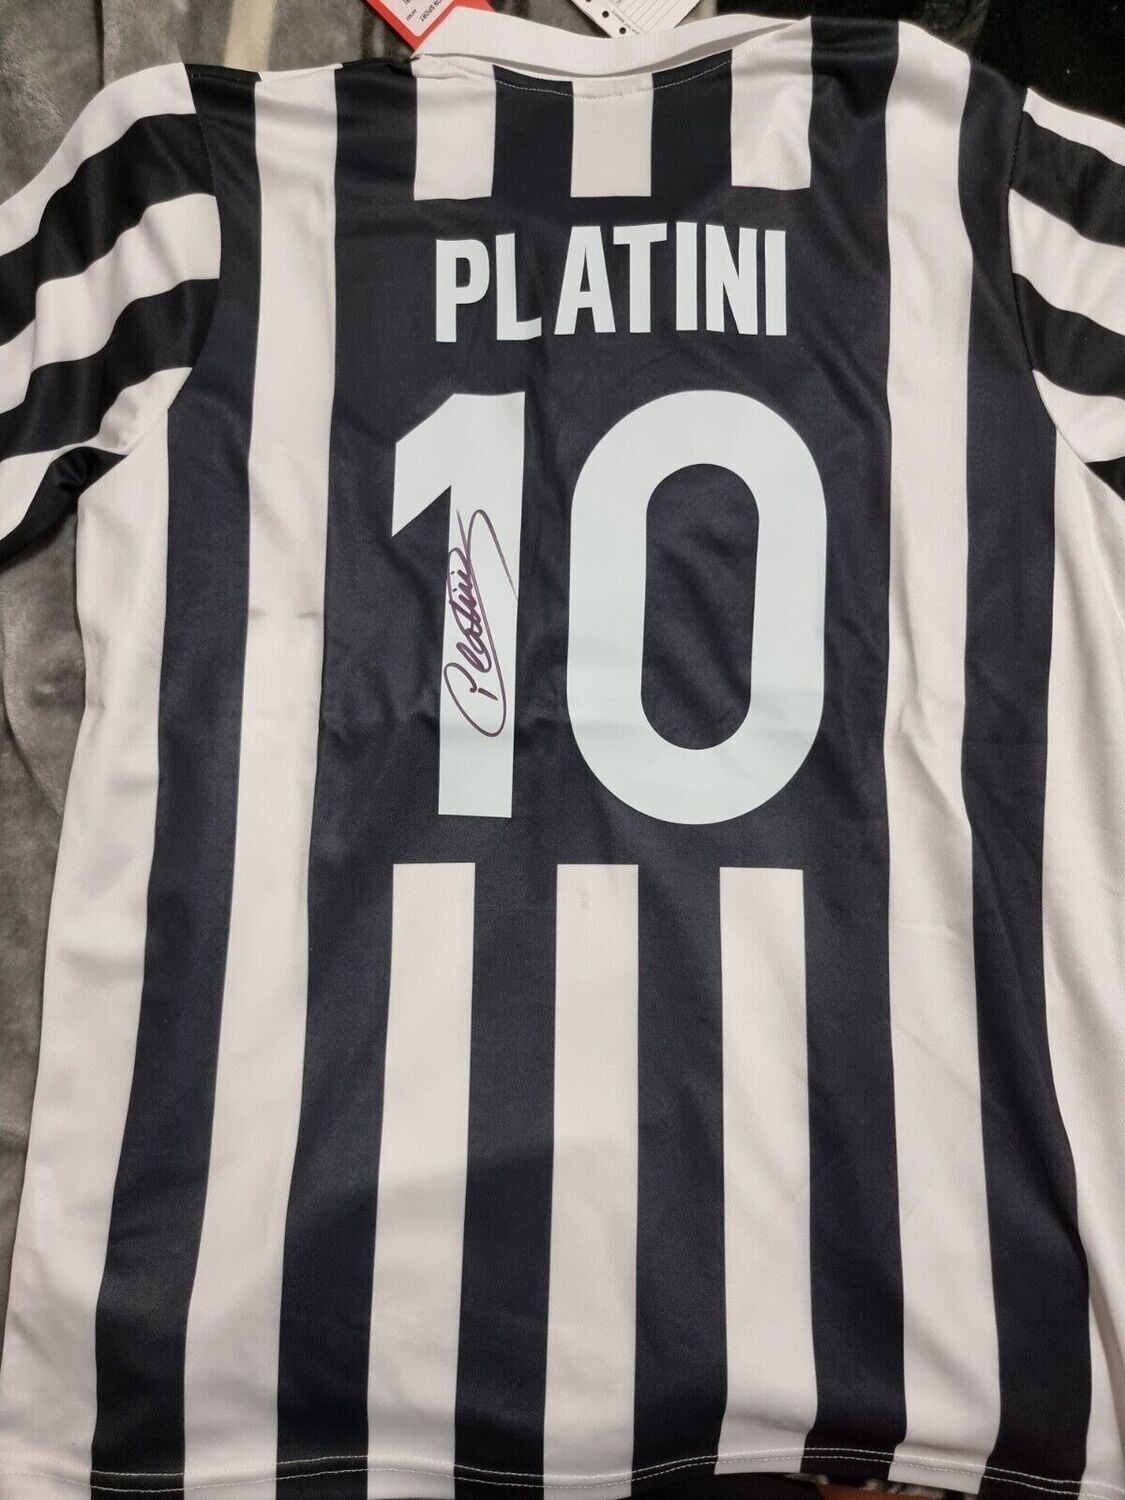 Juventus Platini 10 Platini Autografo  Maglia Jersey Autografata Signed Hand Signed Autograph